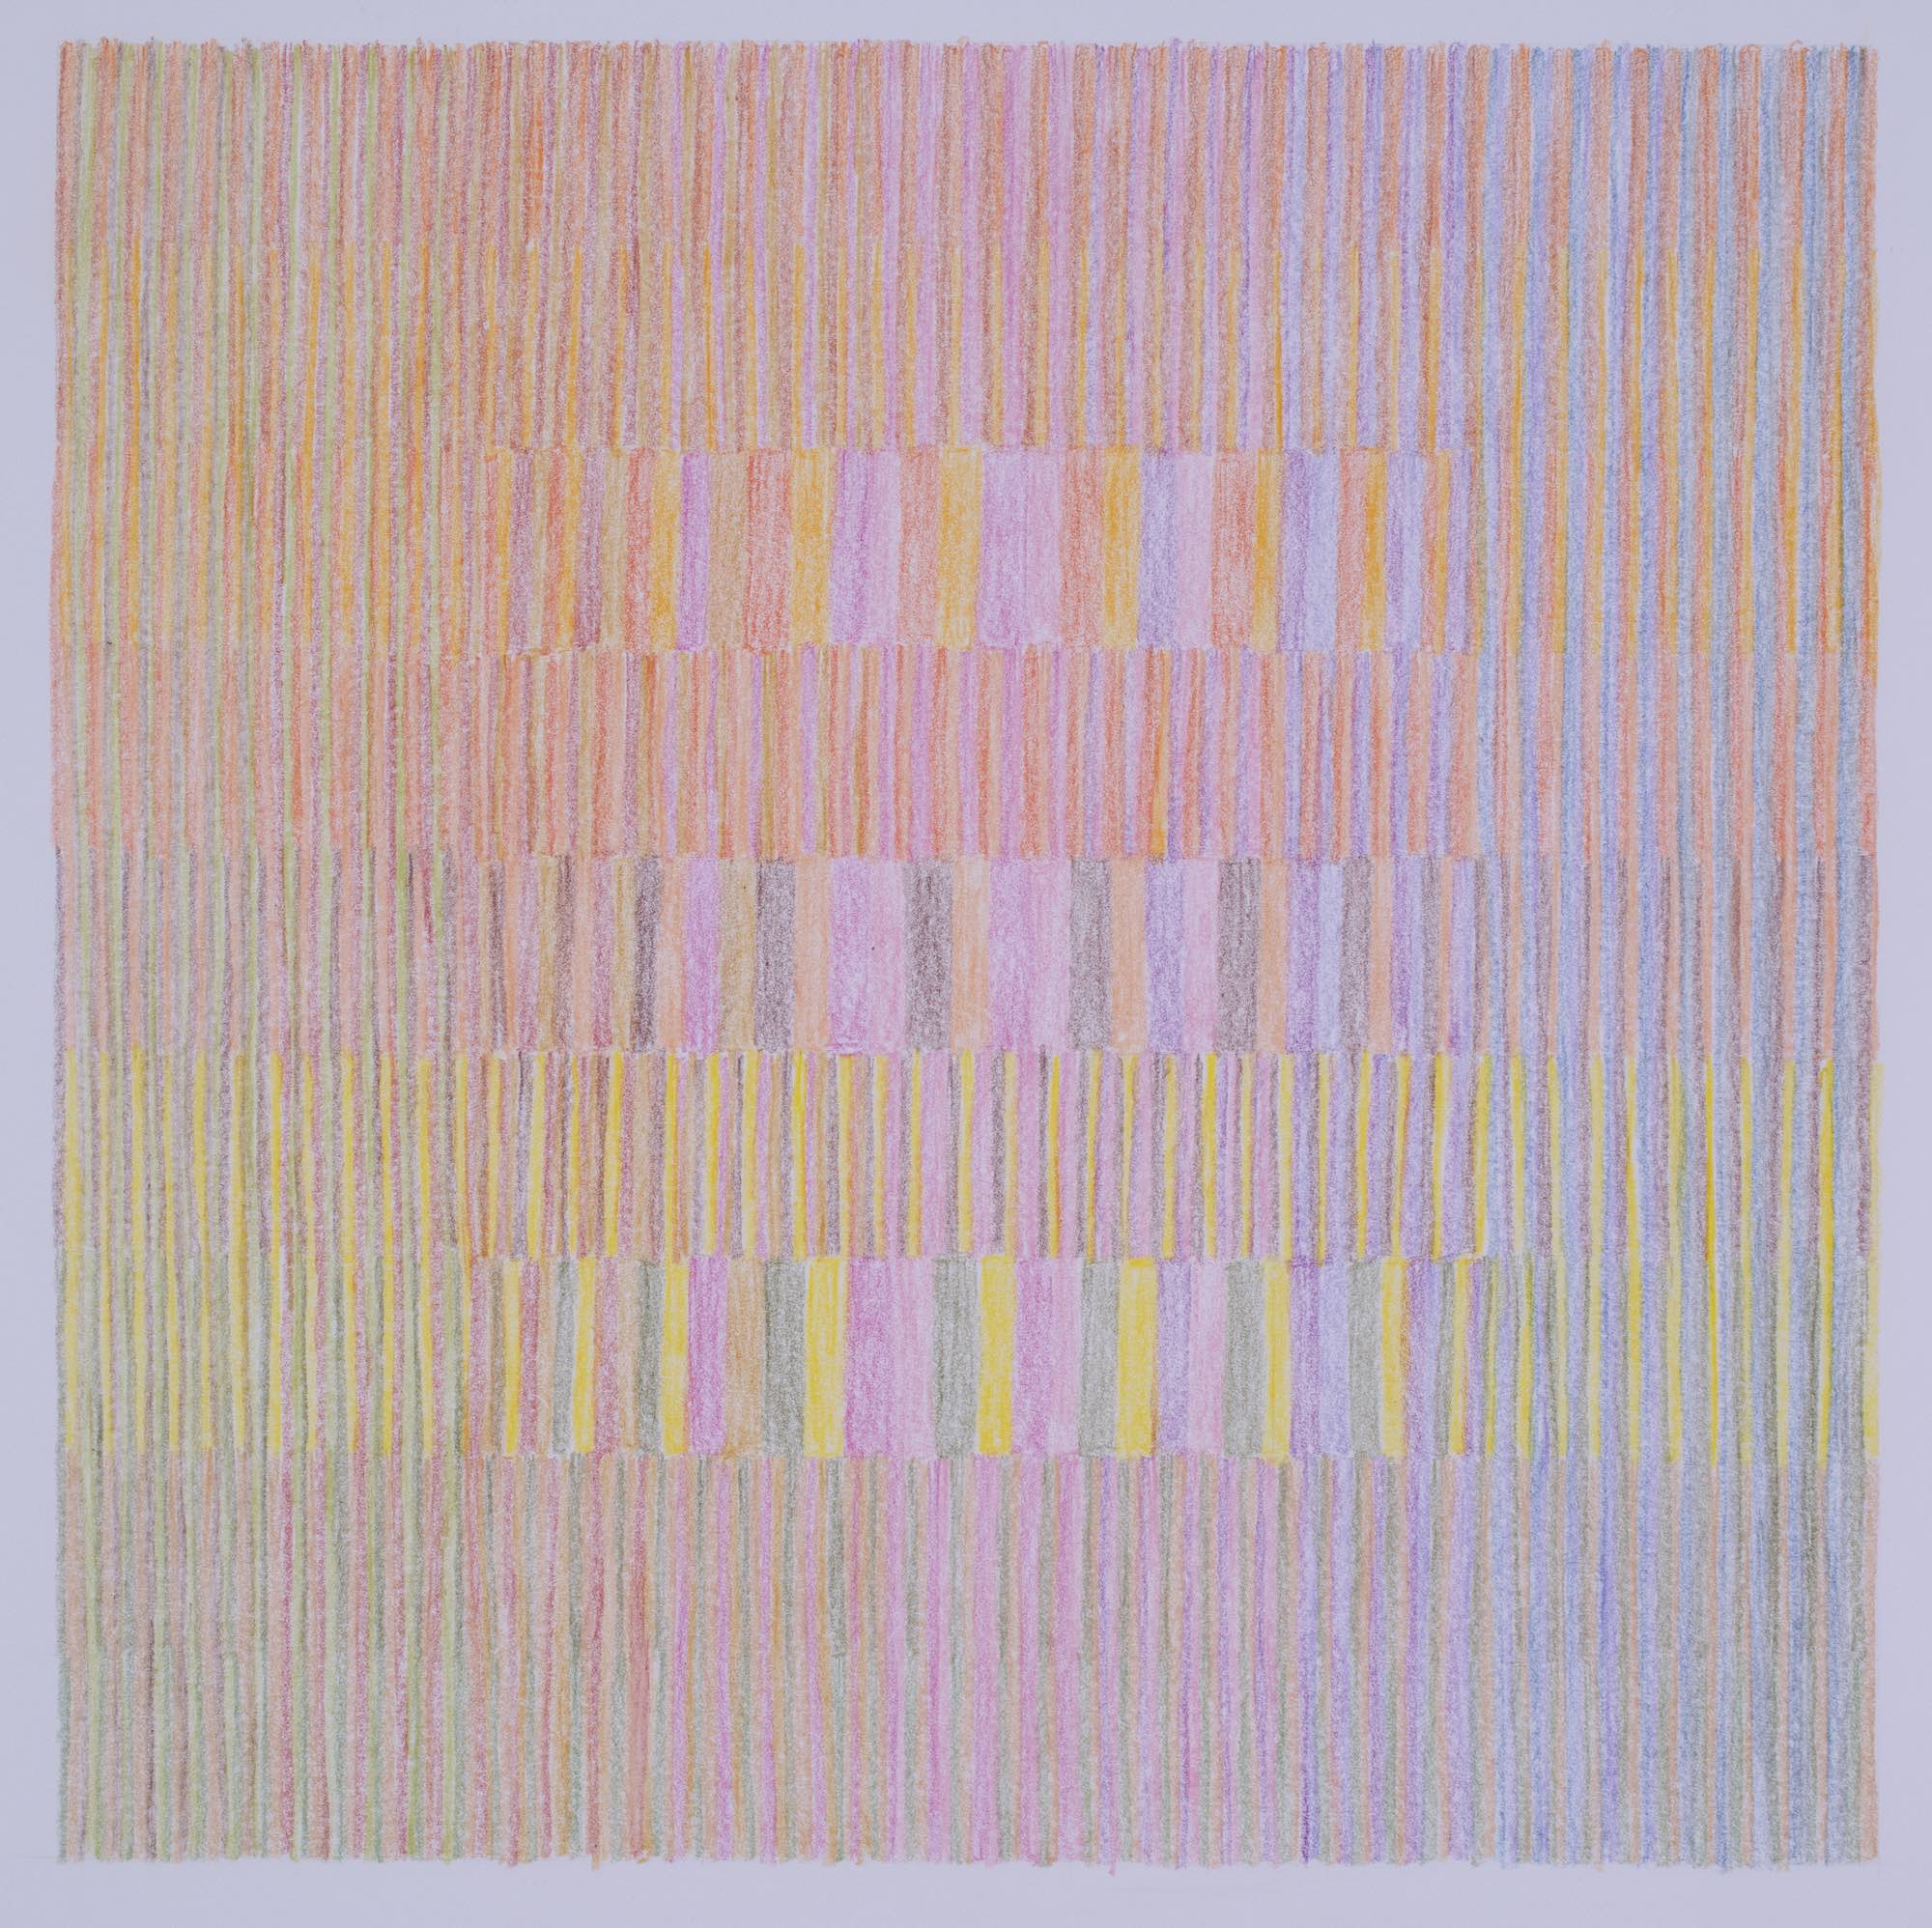   Stilled Life - Shades #4    Wax pastel on paper    14” x  14”  